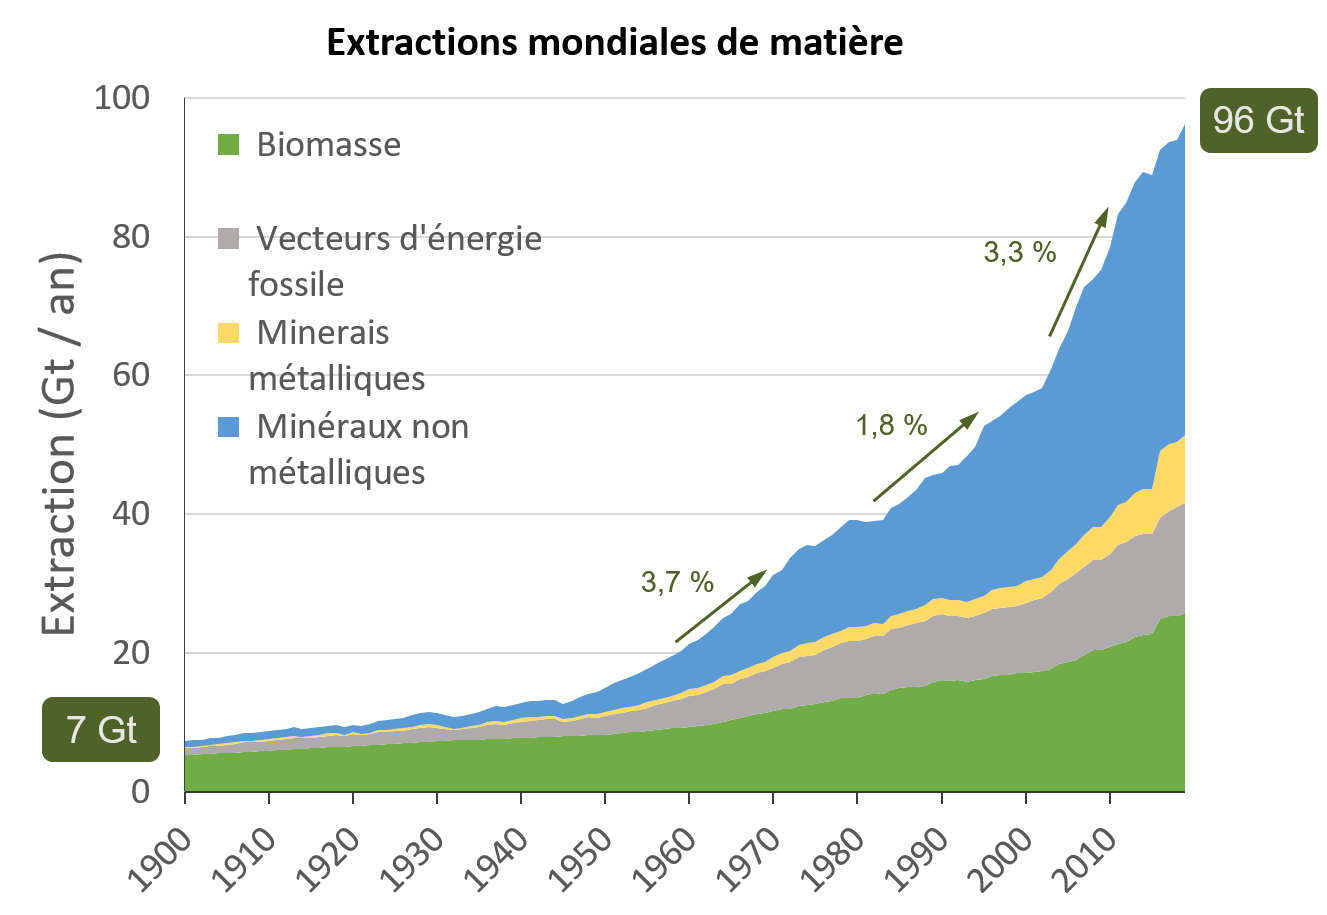 Extractions mondiales de matières 1900-2019